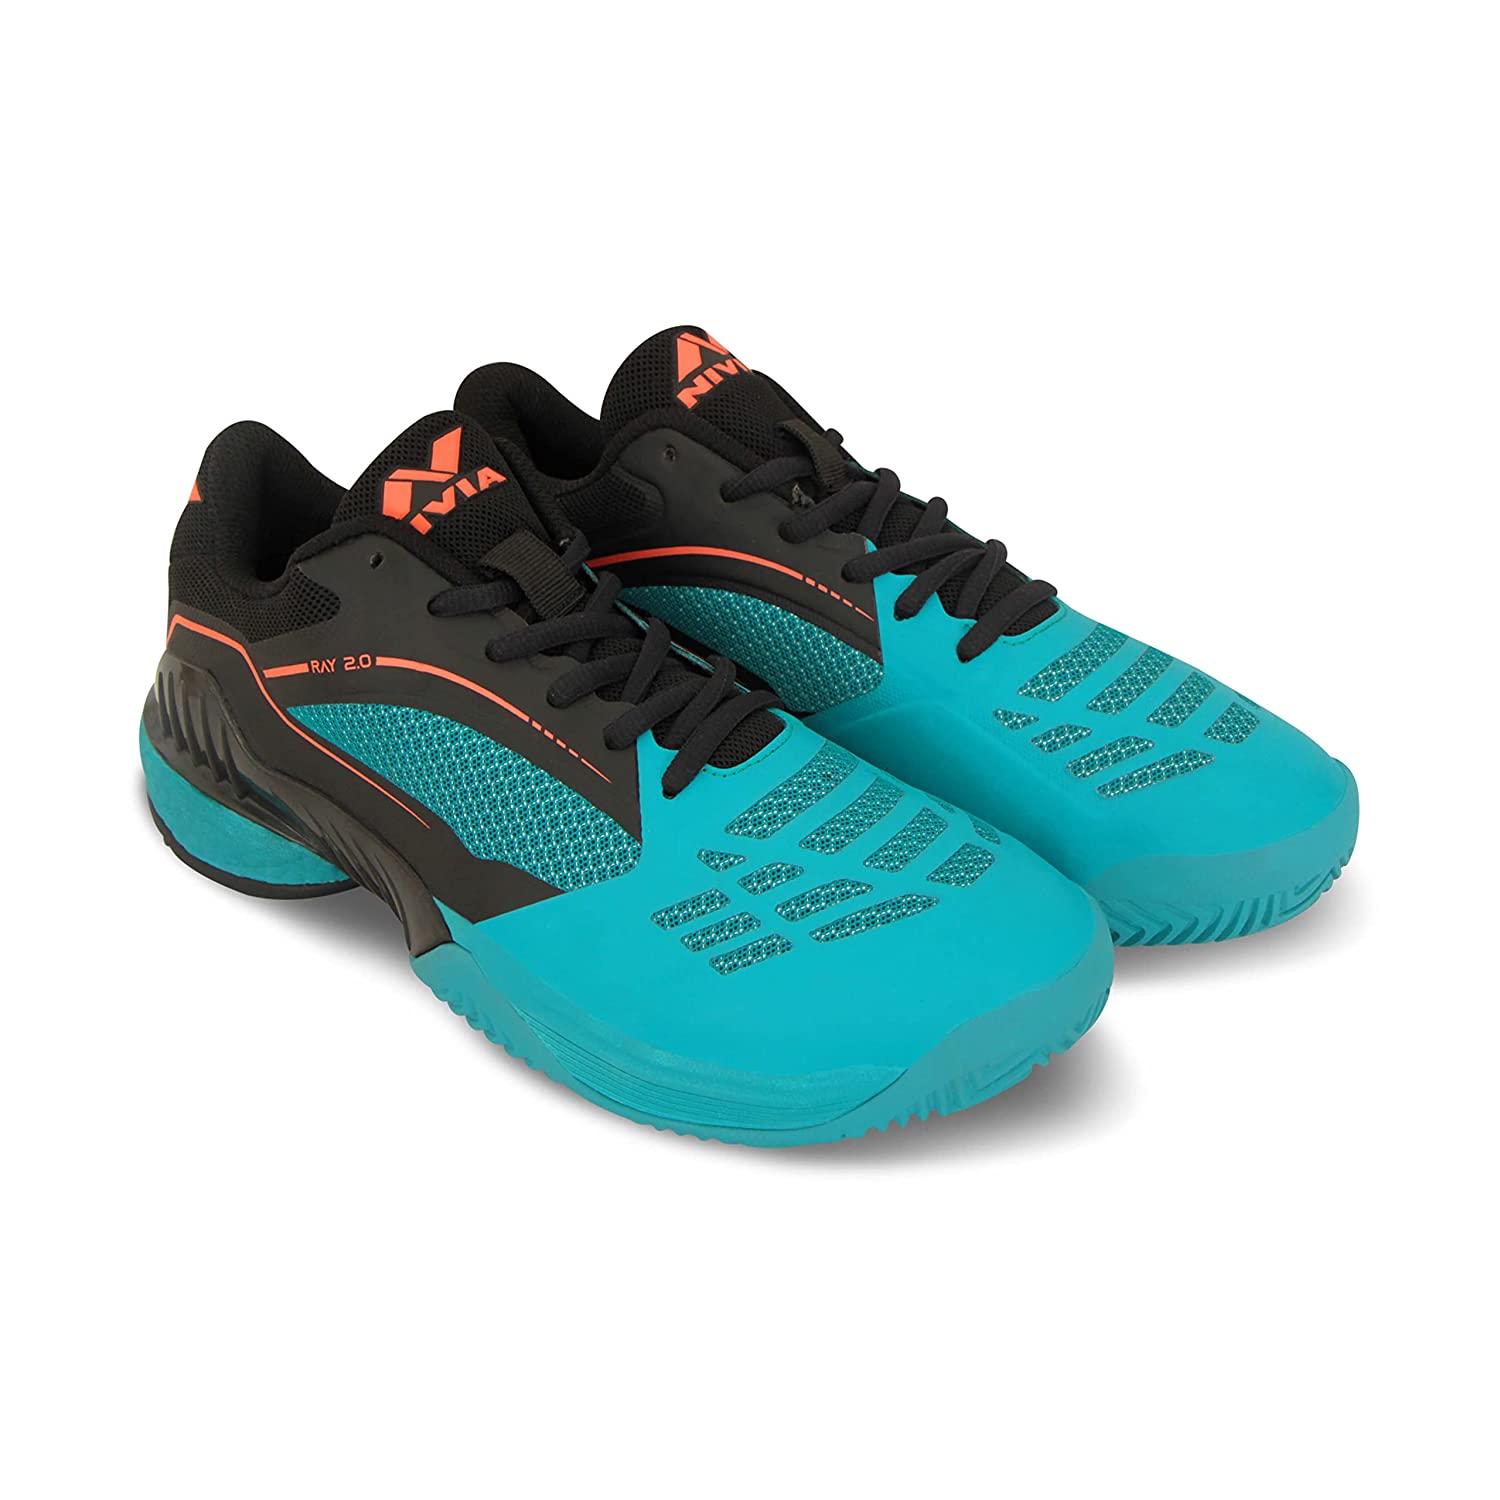 Nivia Ray 2.0 Tennis Shoe, Hyper Turq/Black - Best Price online Prokicksports.com